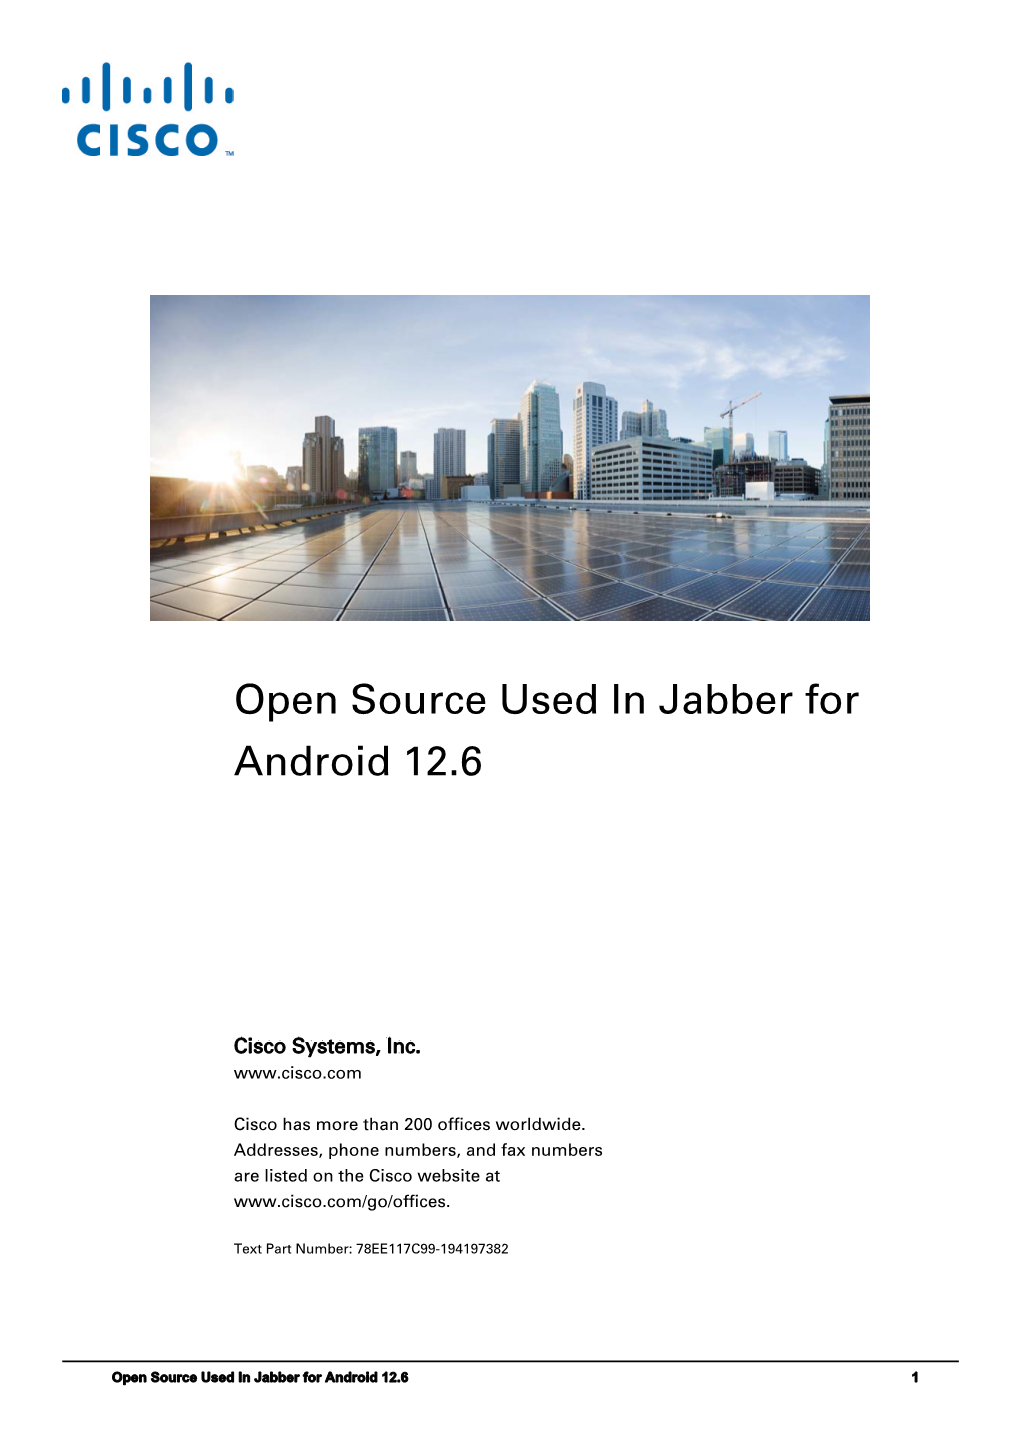 Licensing Information for Cisco Jabber for Android 12.6